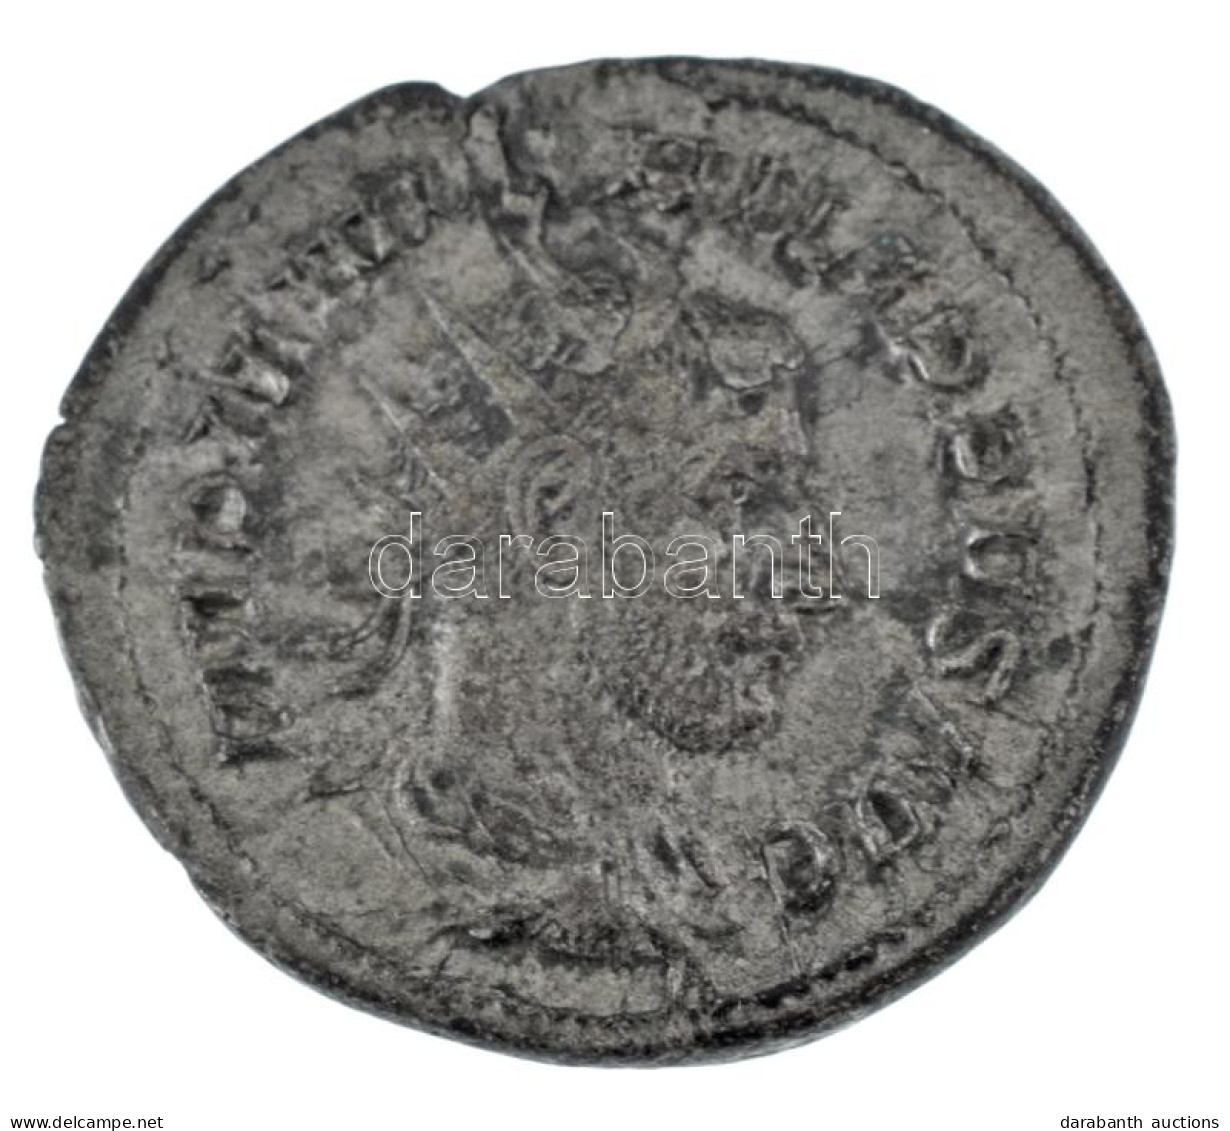 Római Birodalom / Róma / I. Philippus Arabs 244-249. Antoninianus Billon (3,98g) T:XF Patina Roman Empire / Rome / Phili - Unclassified